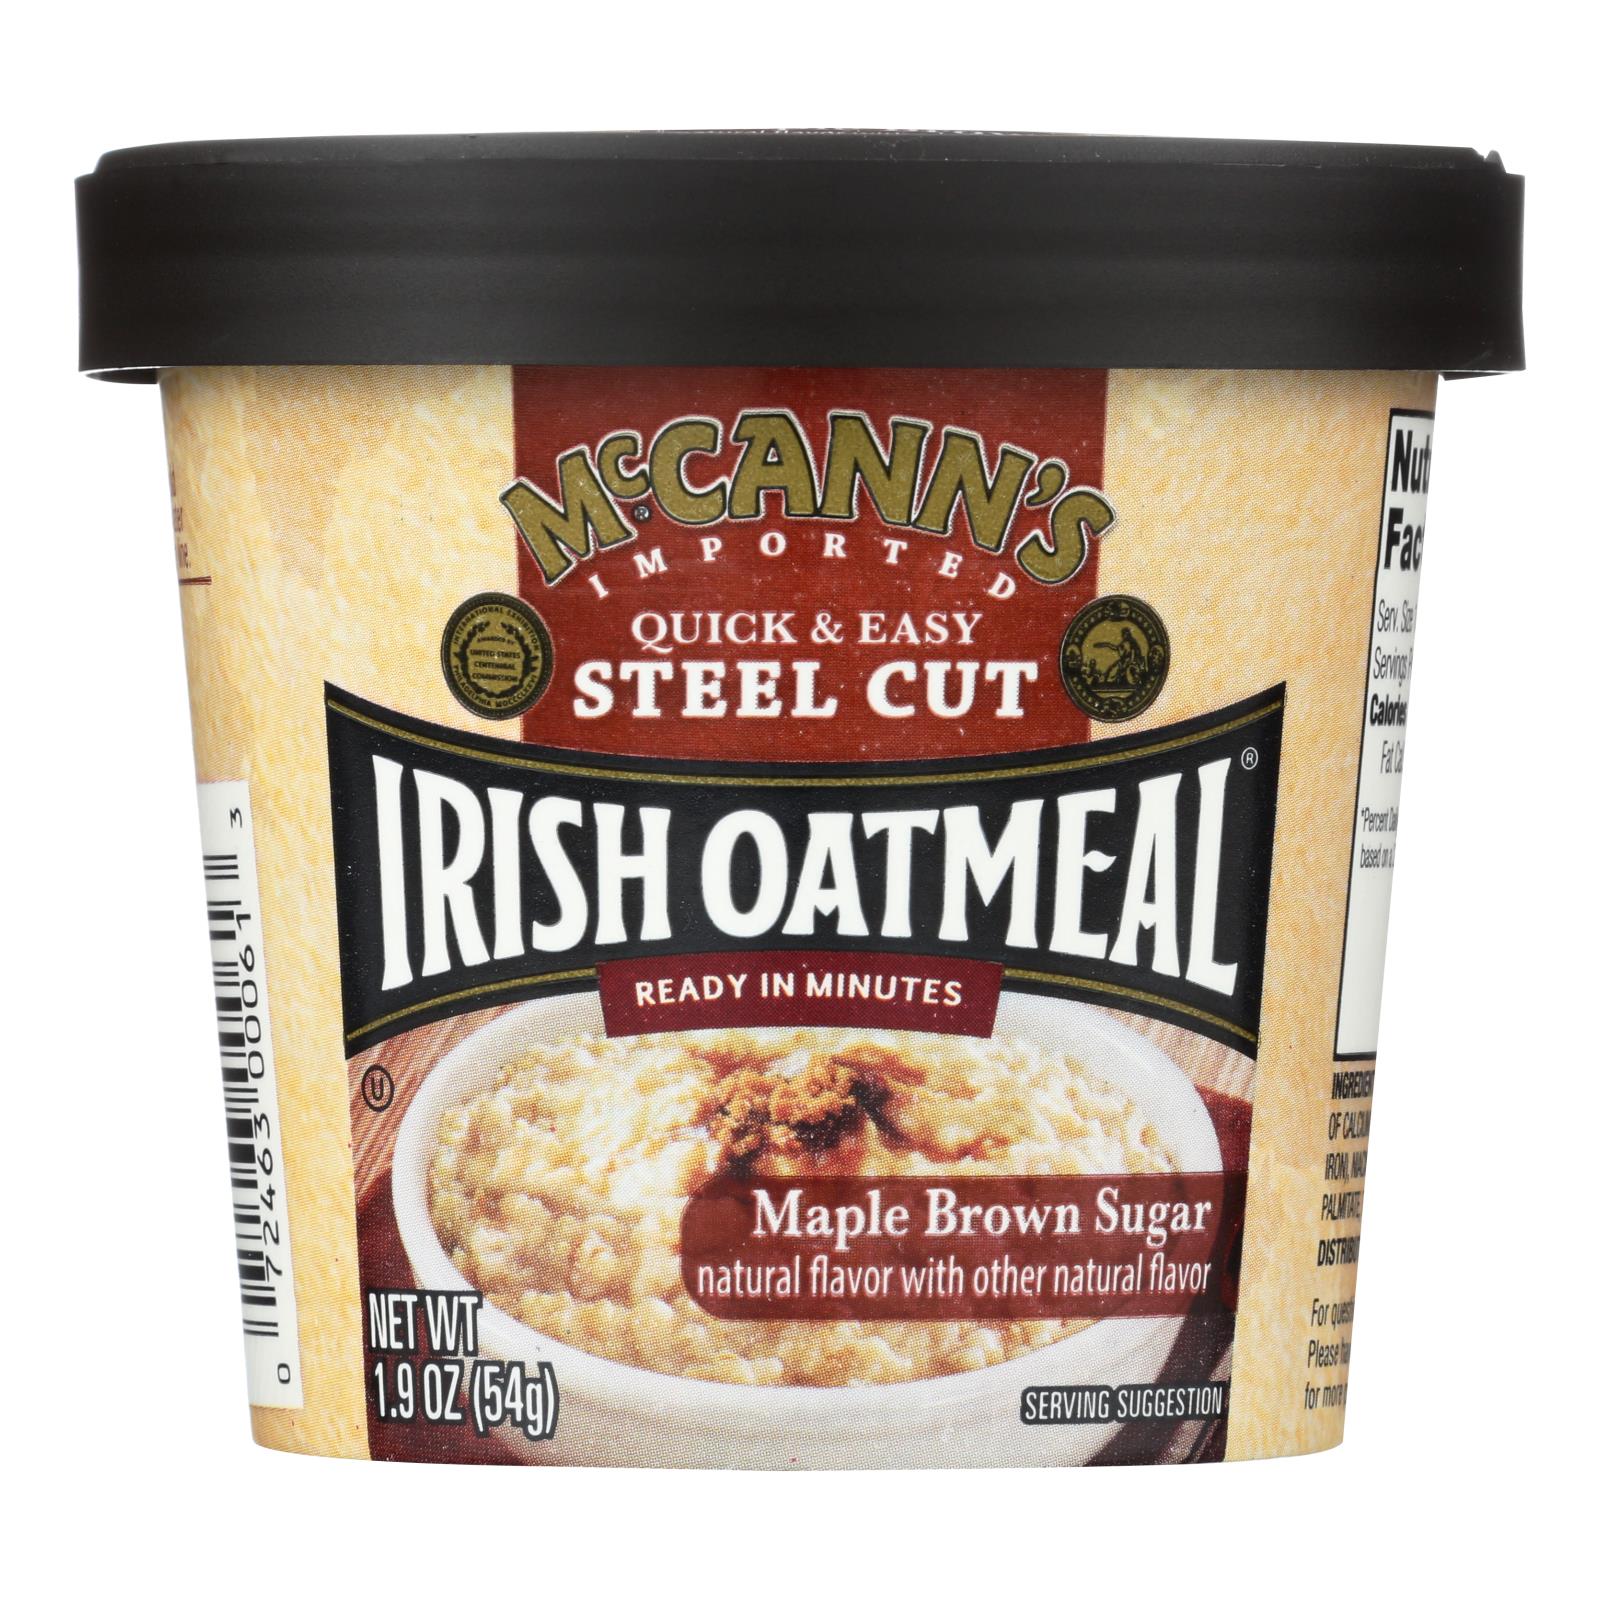 Gruau d'avoine irlandais Mccann's, Mccann's Irish Oatmeal Instant Oatmeal Cup - Maple Brown Sugar - Case of 12 - 1.9 oz (Pack of 12)